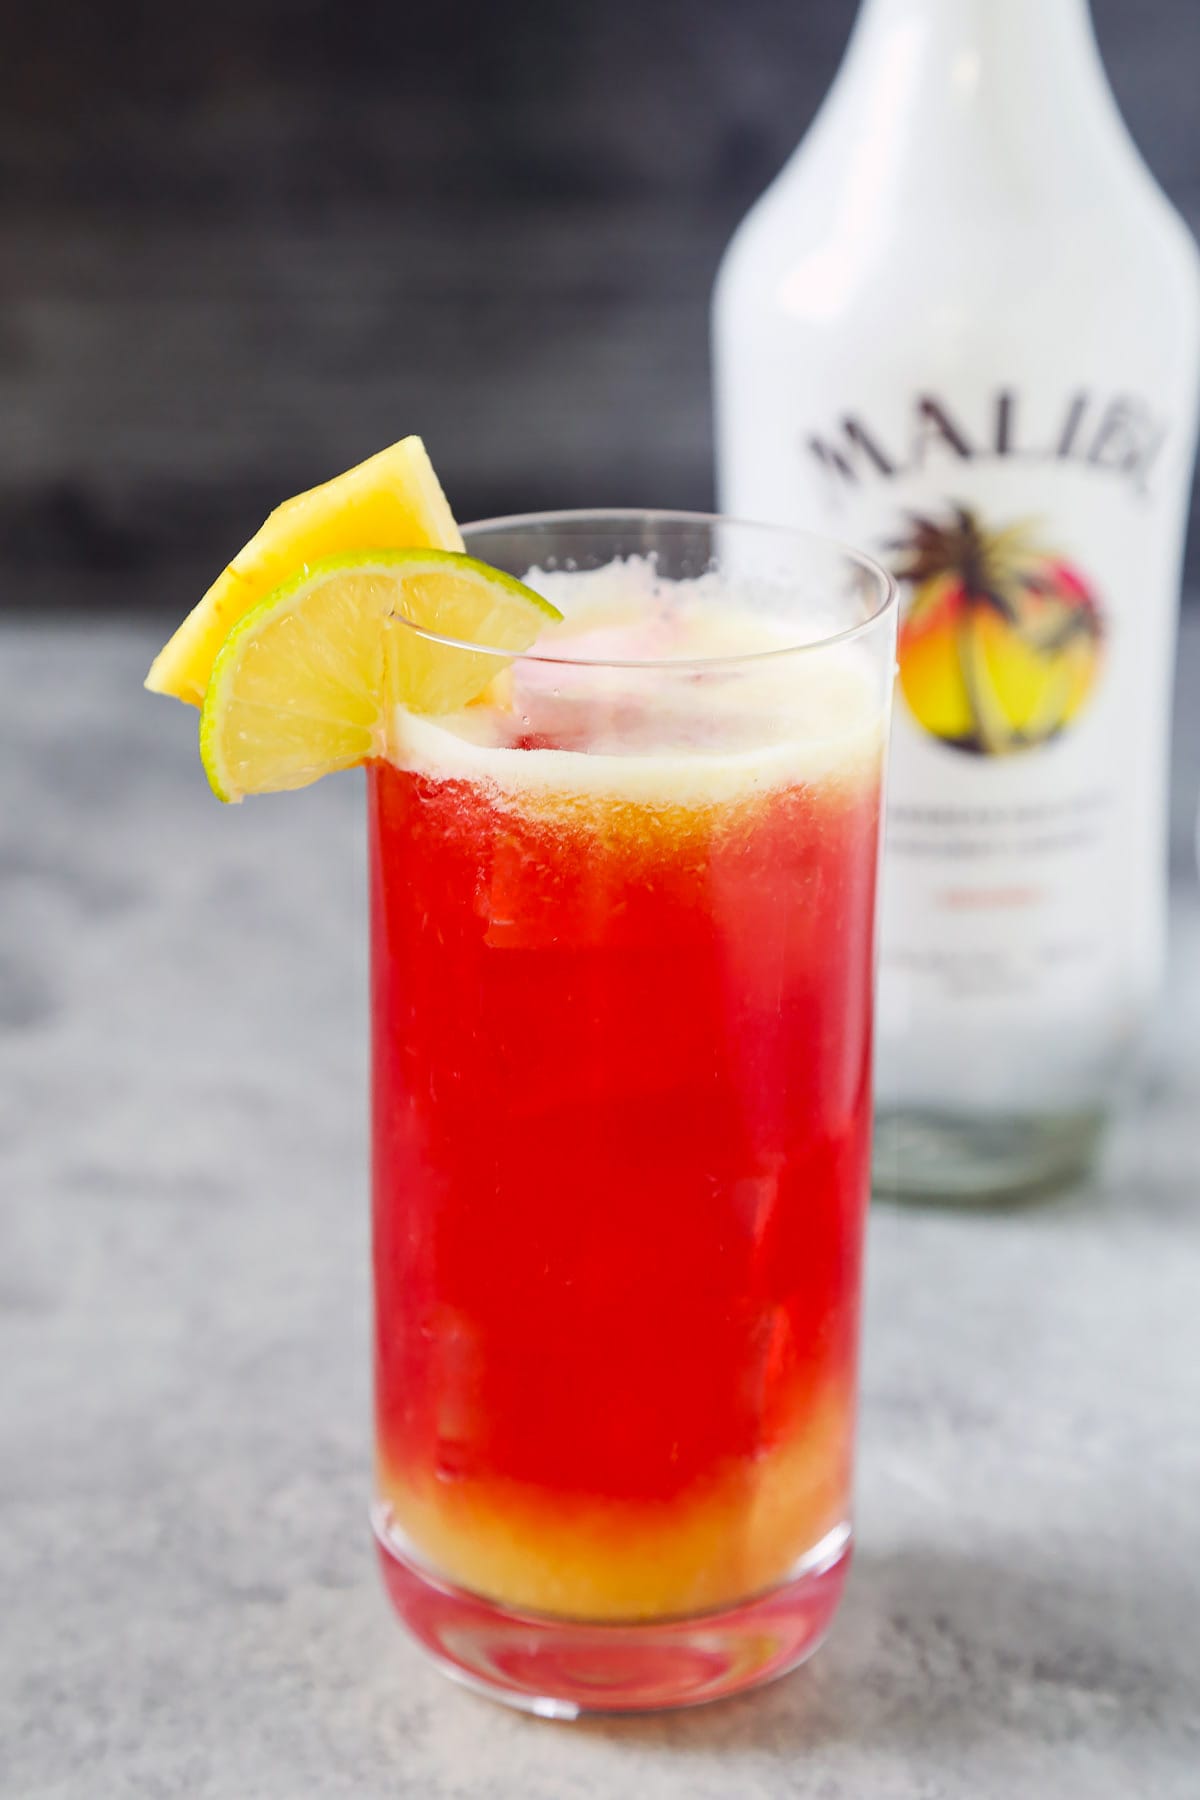 Malibu Bay Breeze cocktail